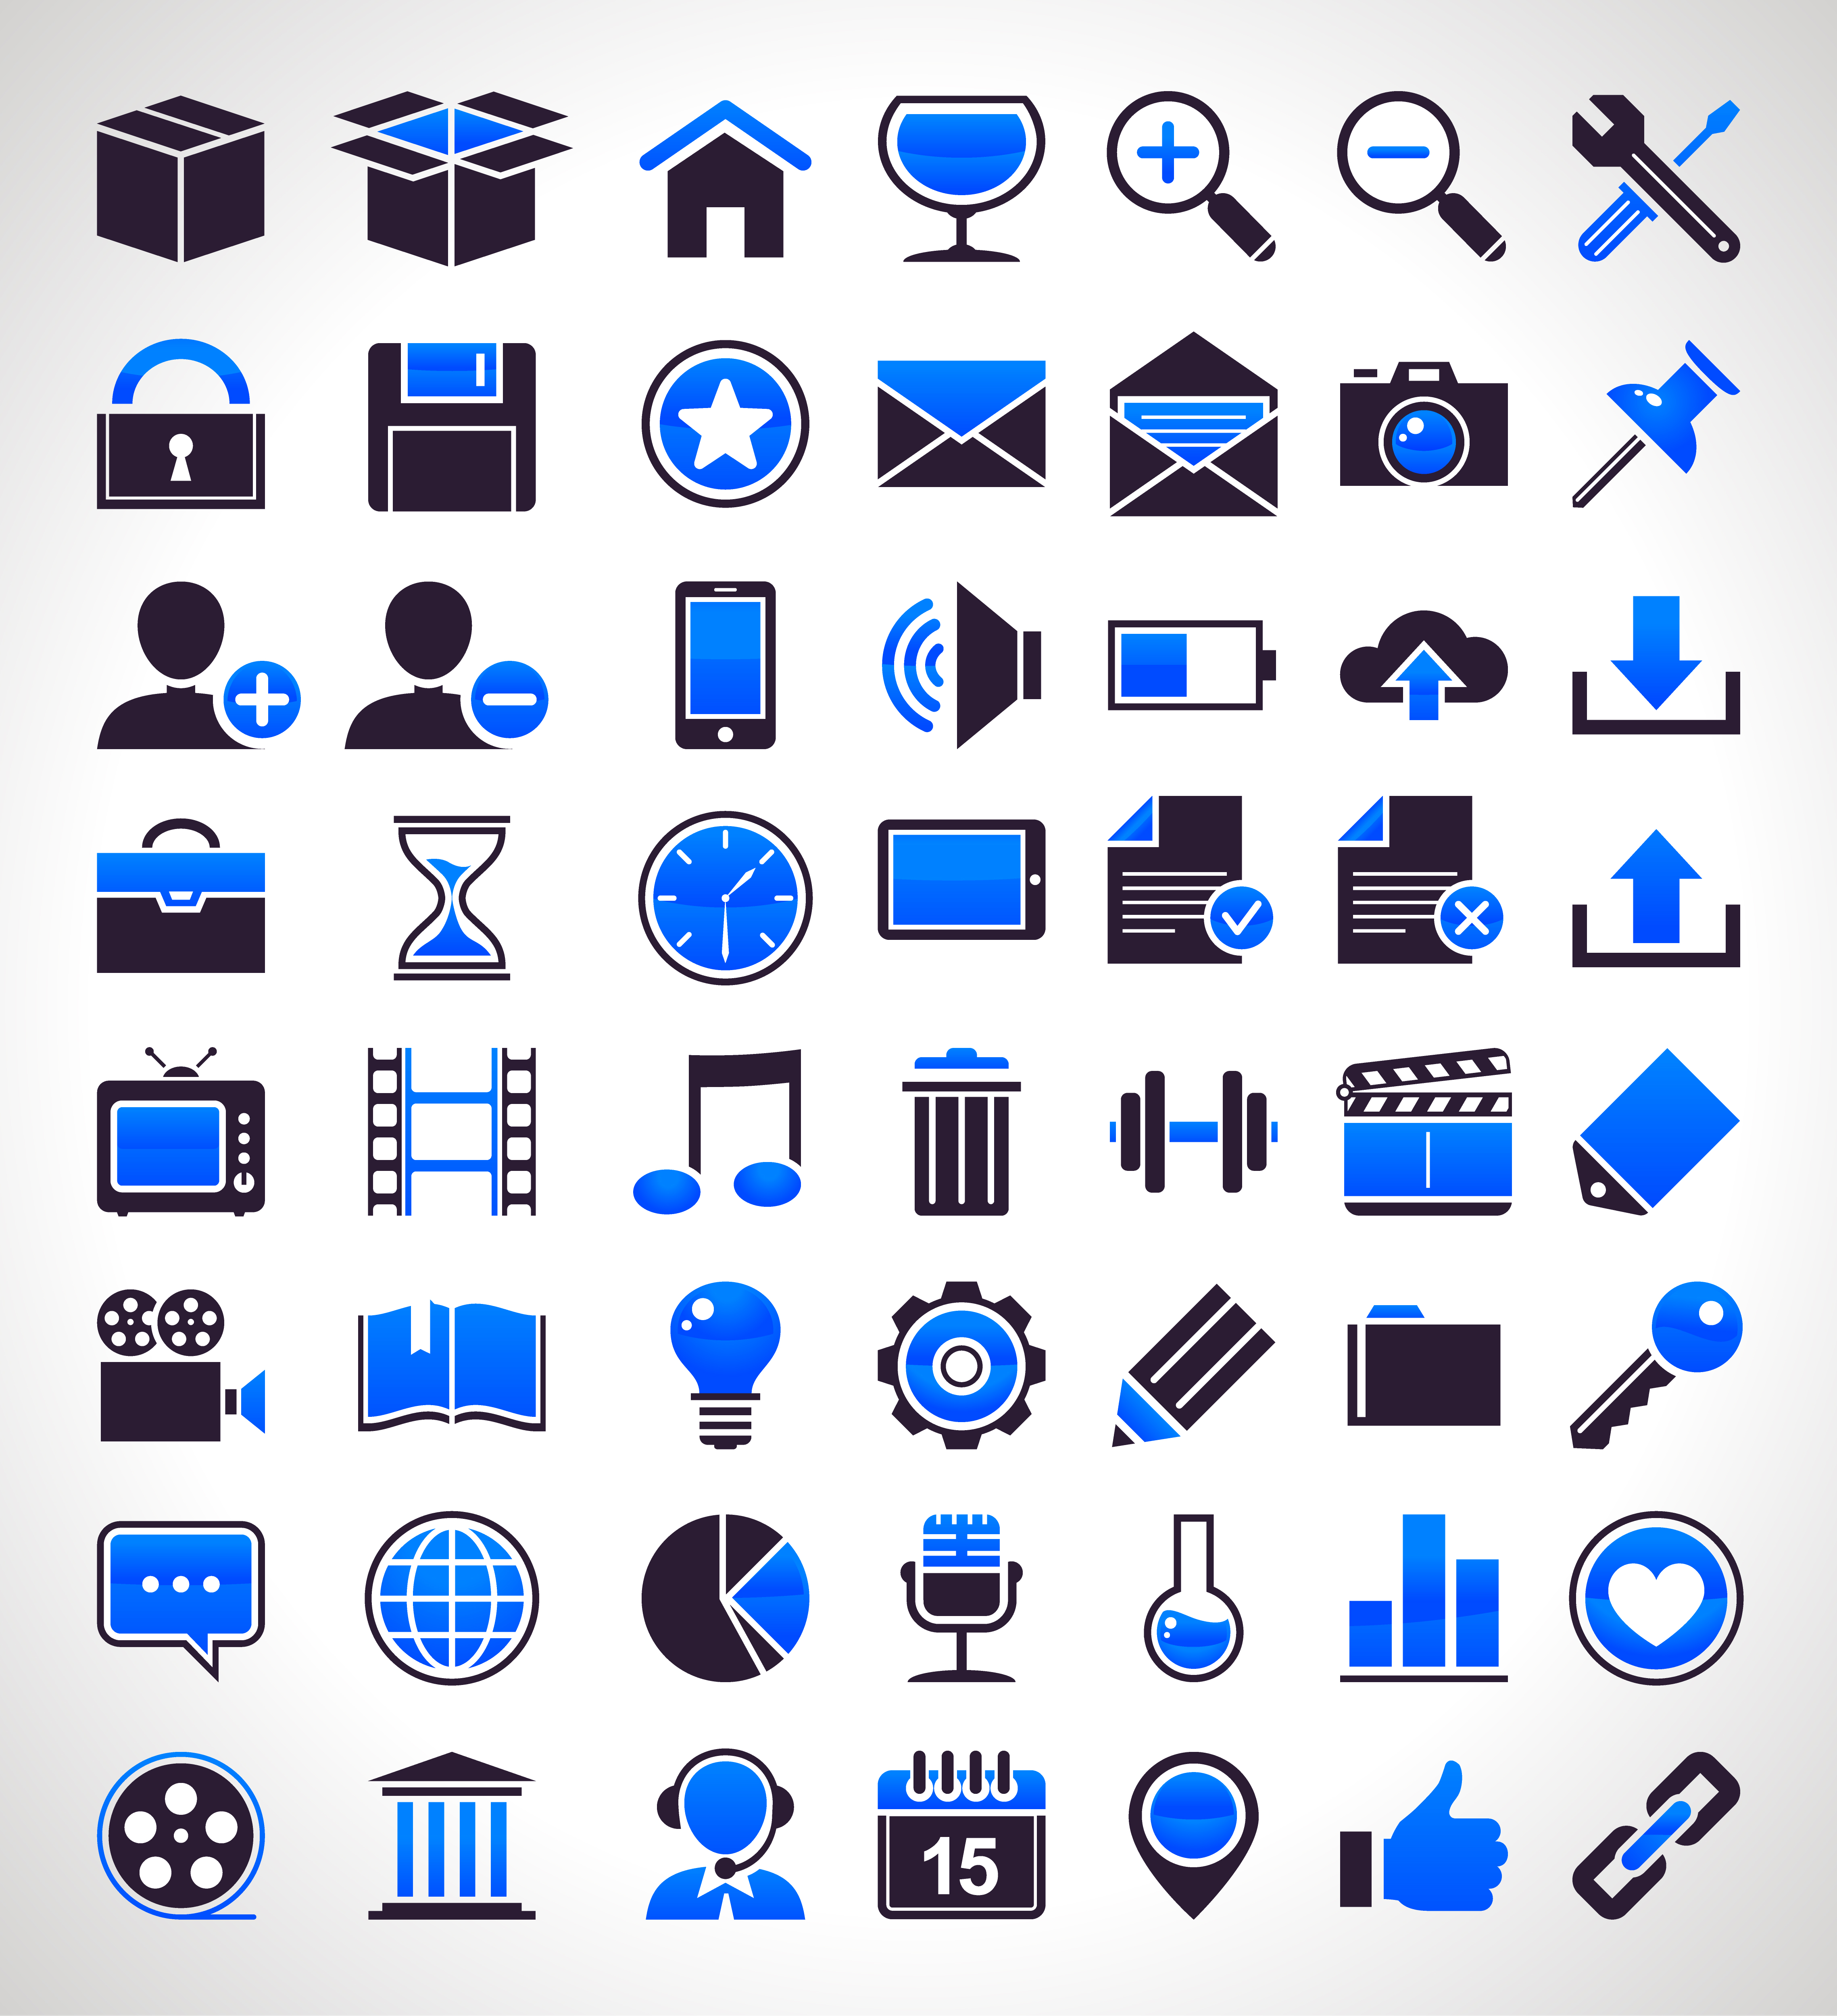 Download Vector set of 56 simple universal icons - Download Free Vectors, Clipart Graphics & Vector Art